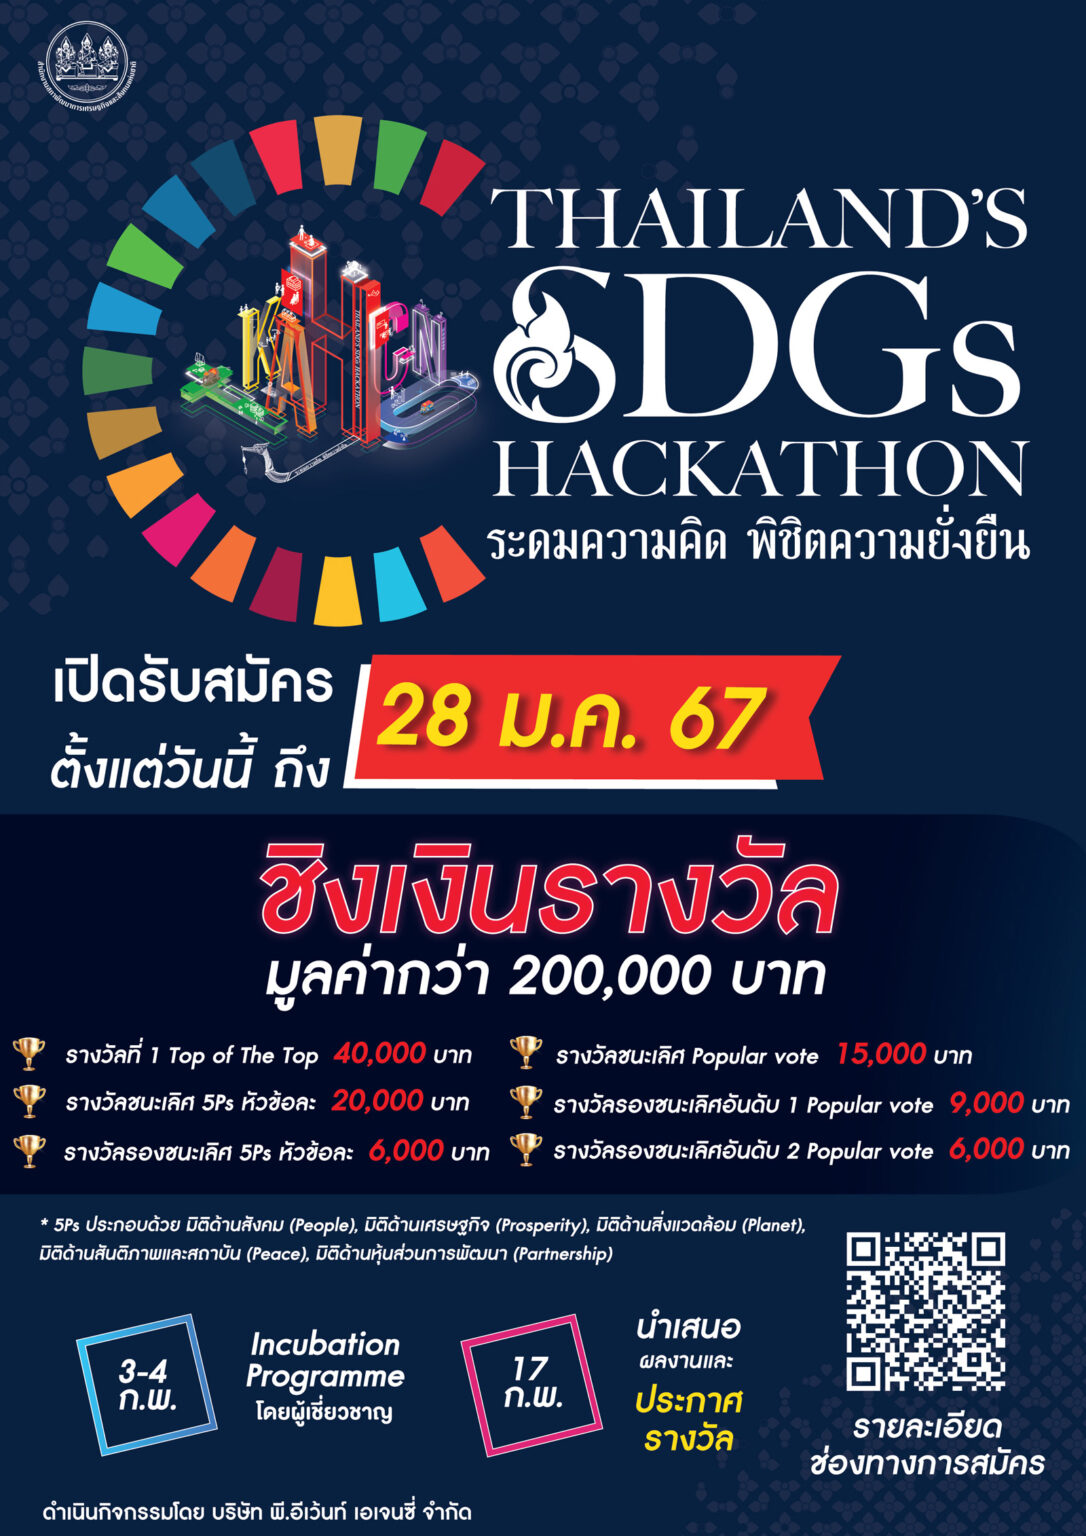 Thailand's SDGs Hackathon